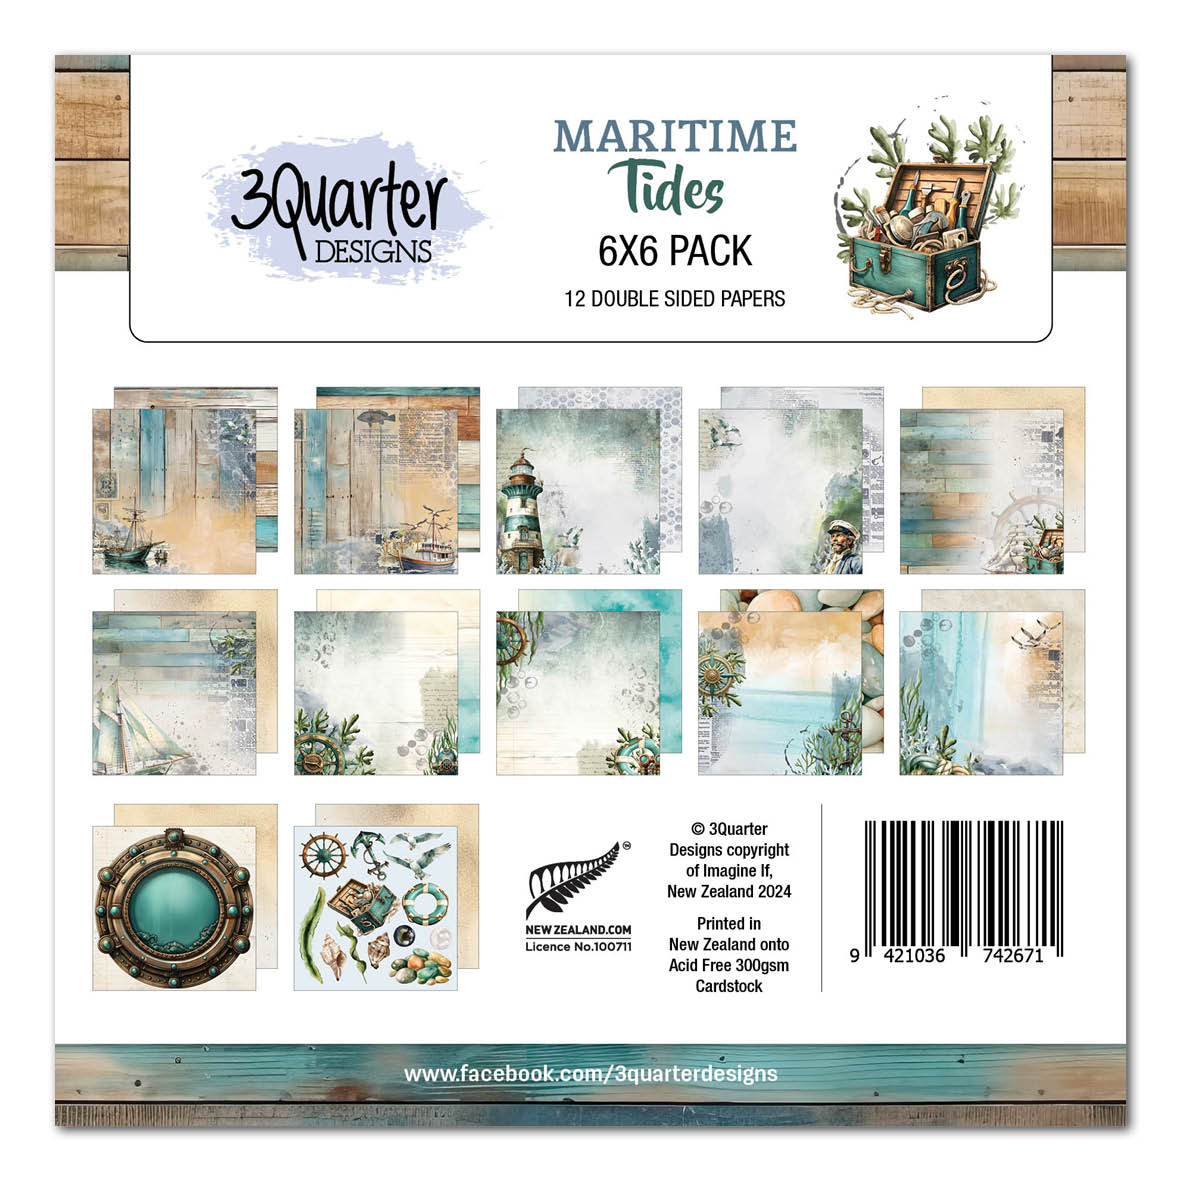 3Quarter Designs Maritime Tides 6x6 Paper Pack